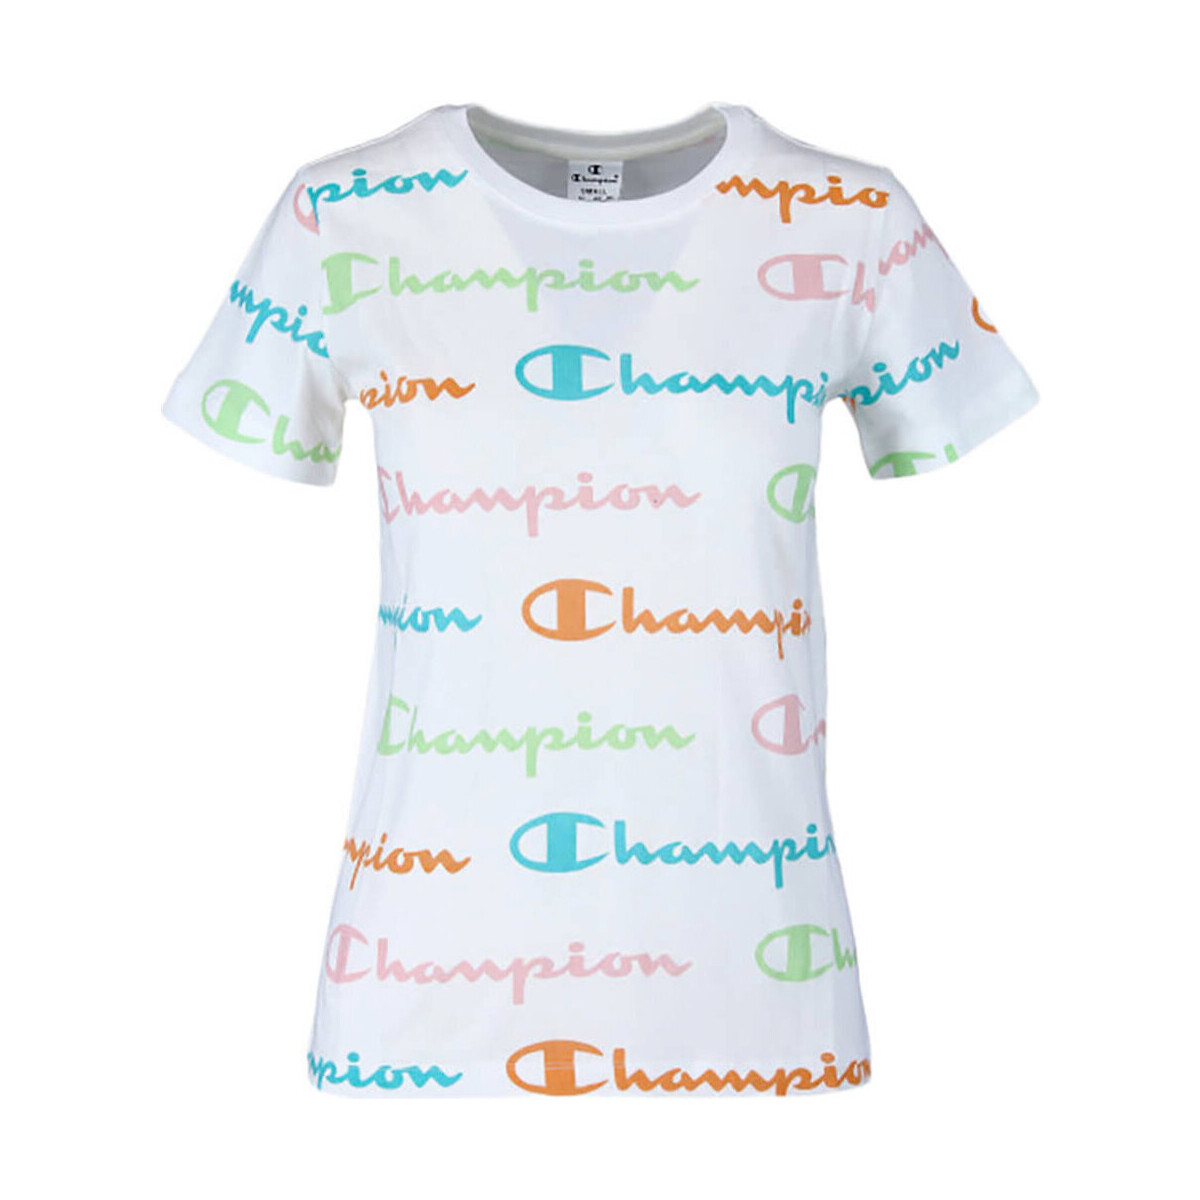 Vêtements Femme men polo-shirts robes eyewear storage Kids mats cups Crewneck T-Shirt Multicolore